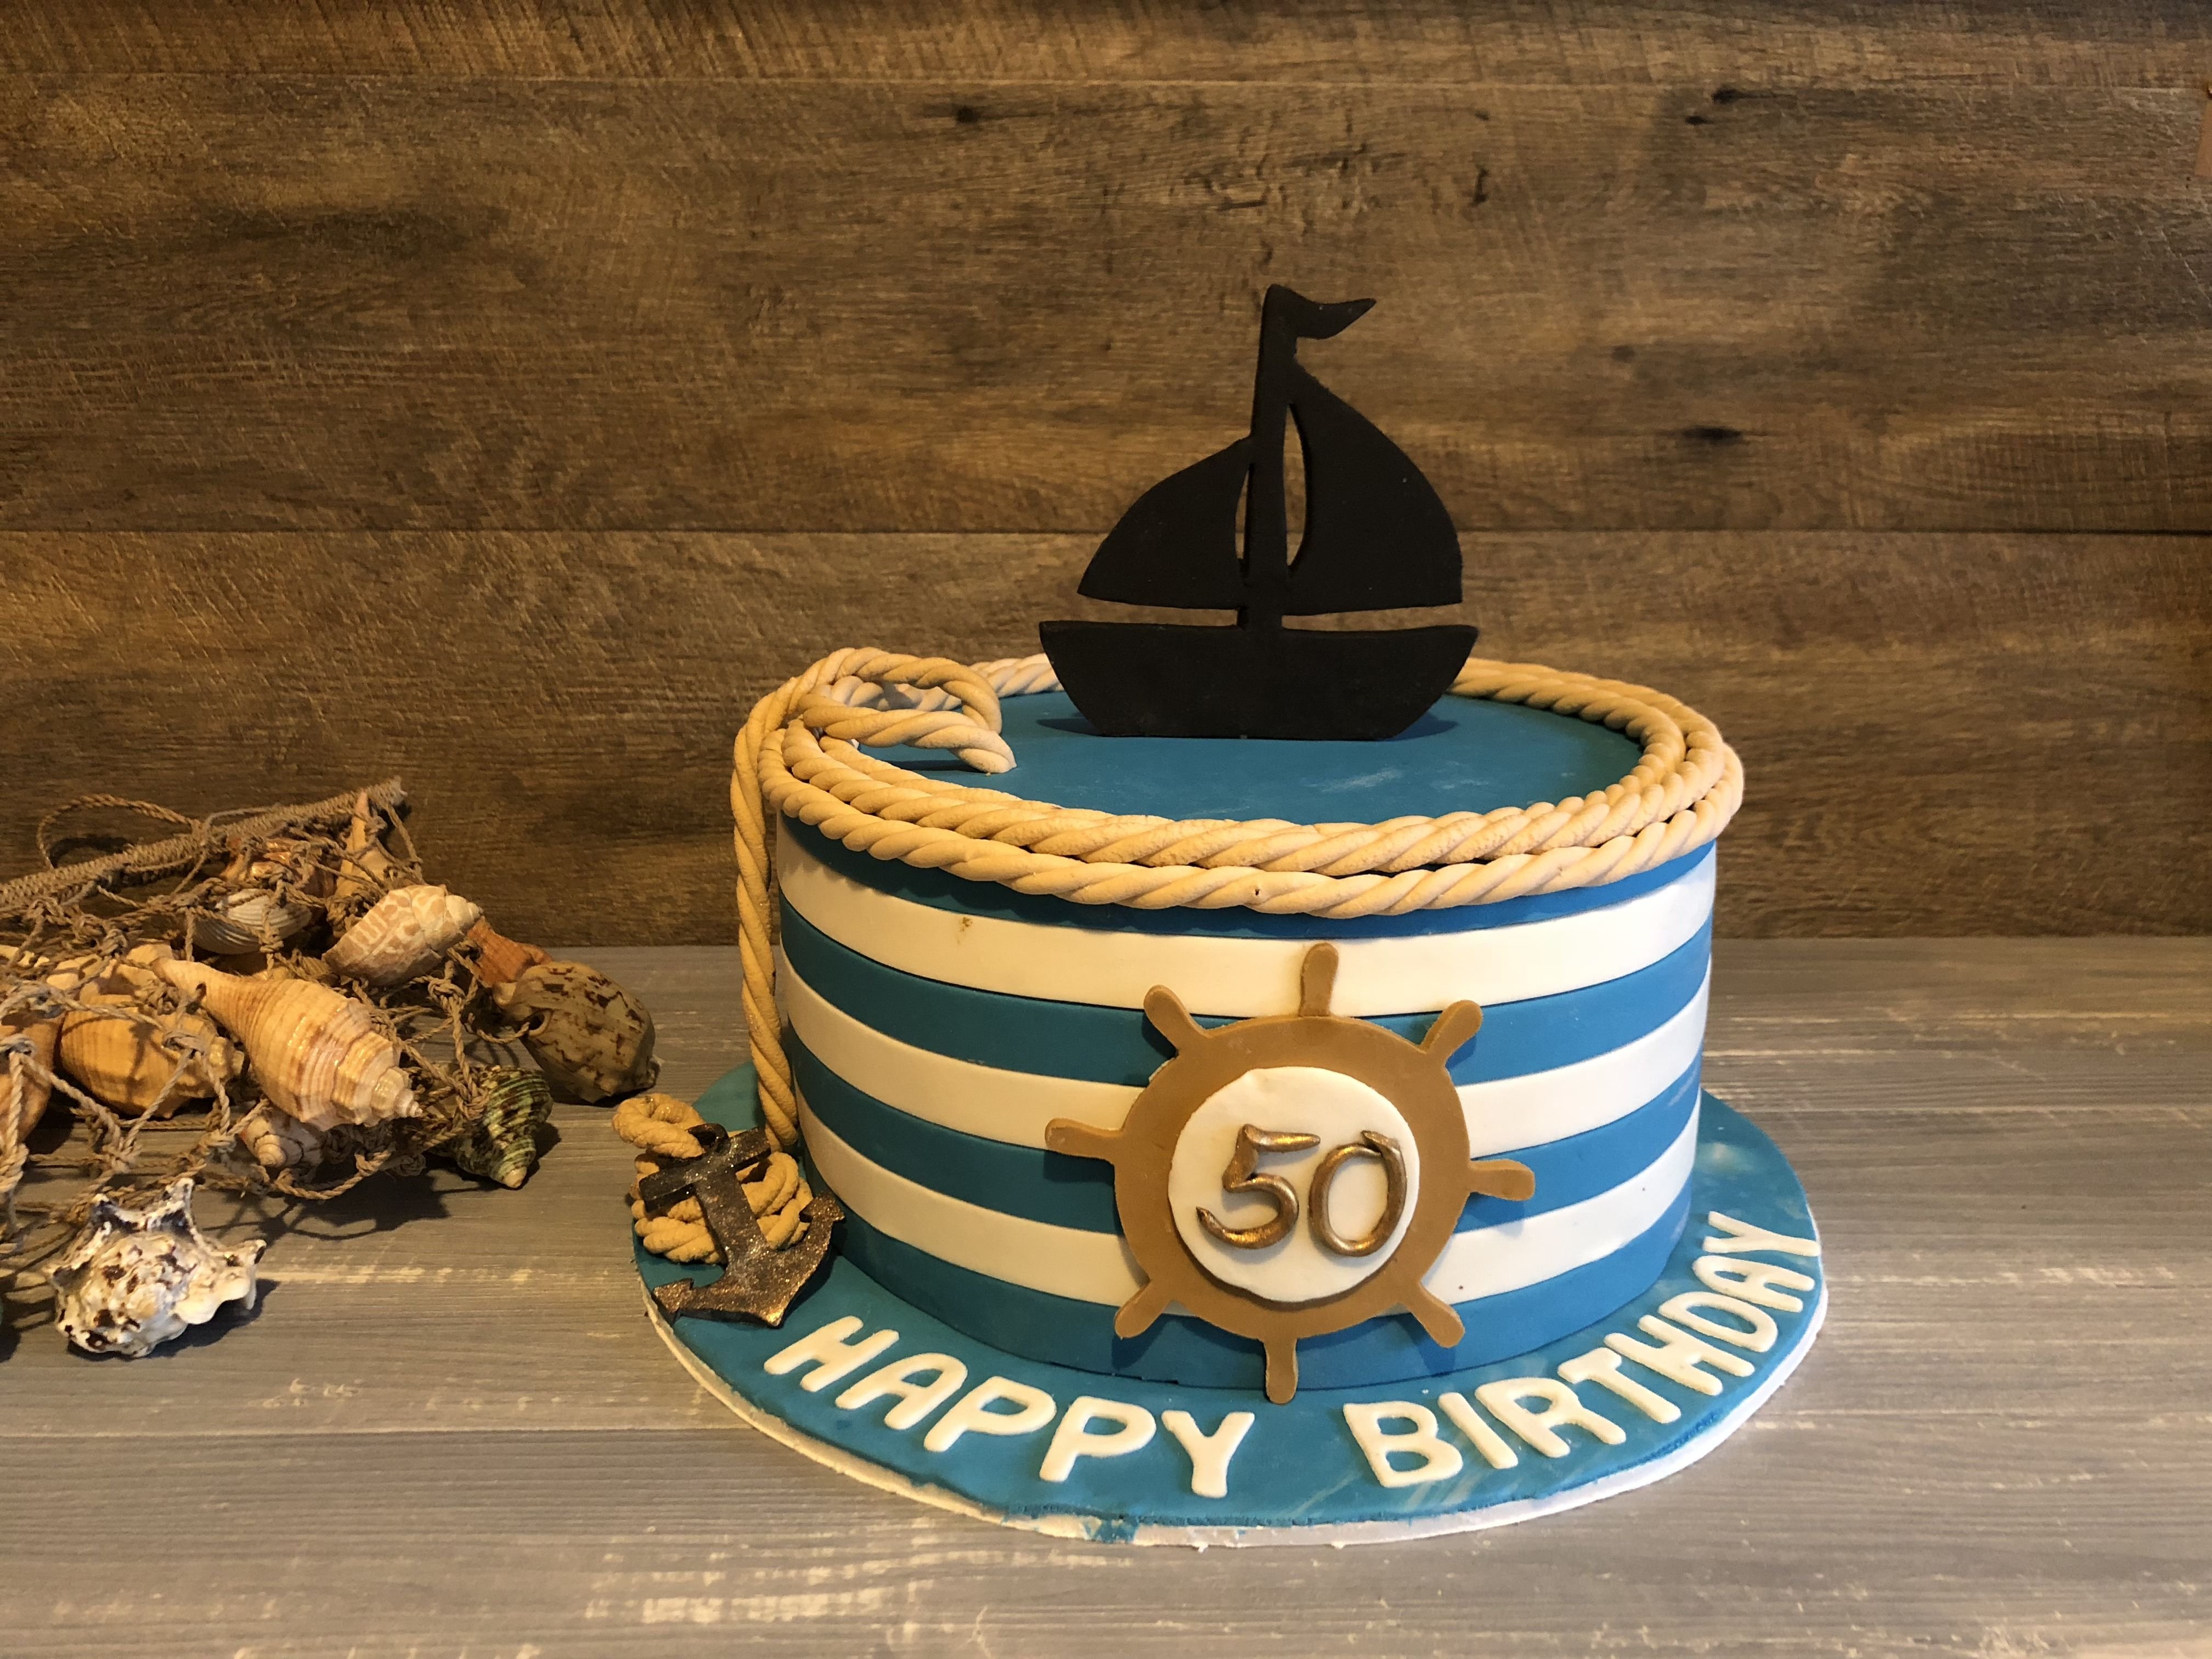 День рождения мужчине морское. Торт морская тематика. Торт в морском стиле. Торт для моряка. Торт с морской тематикой для мужчины.